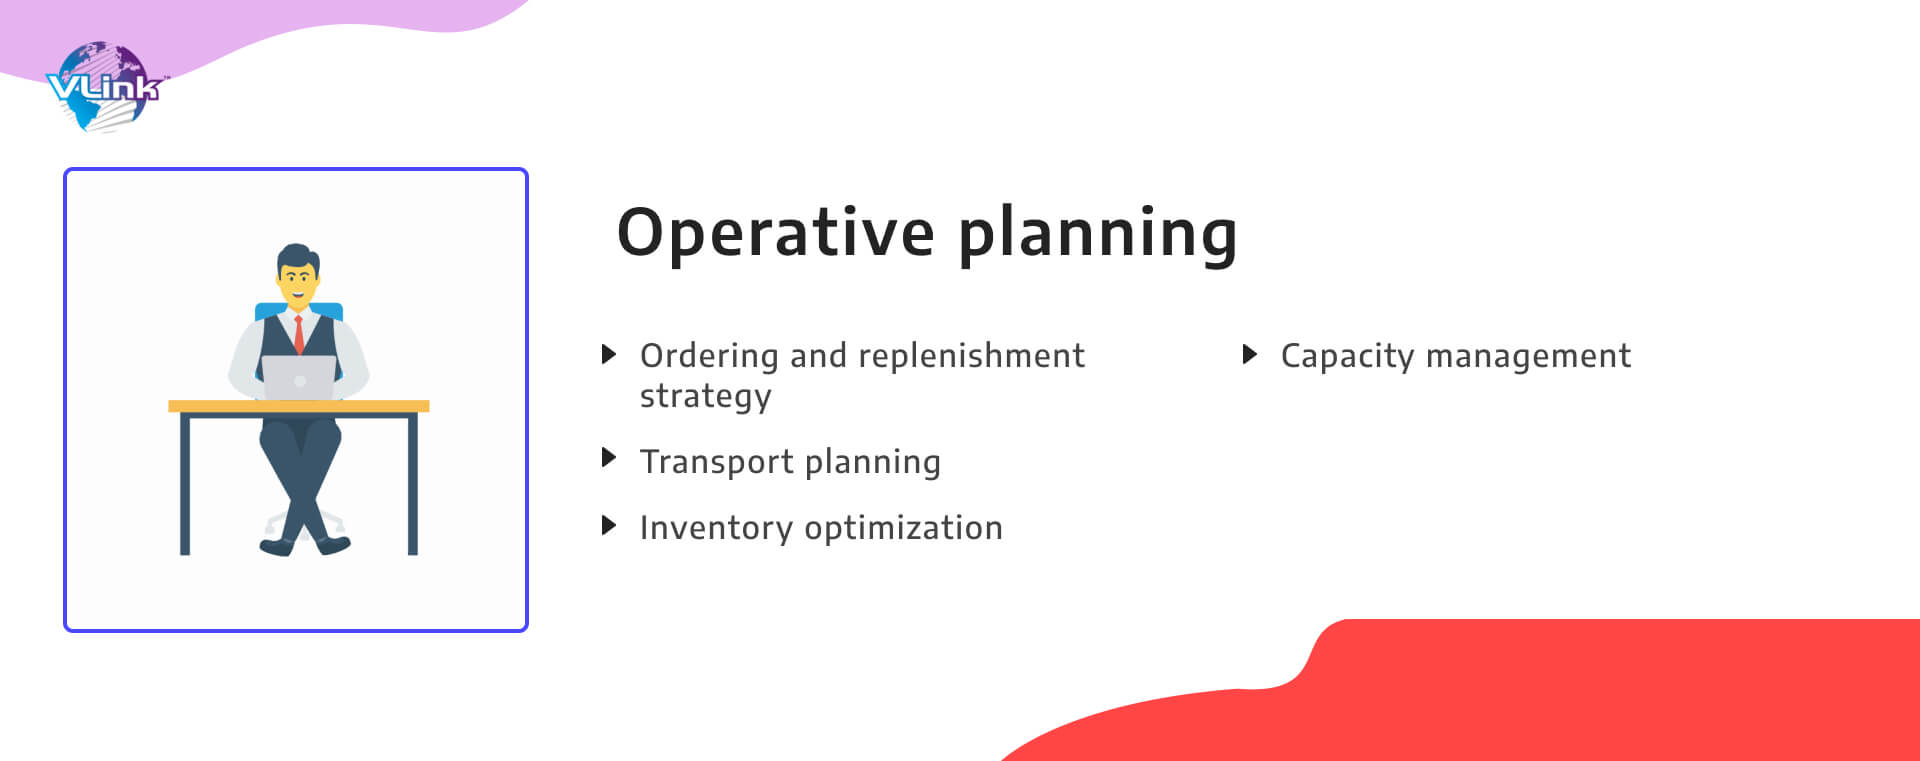 Operative planning